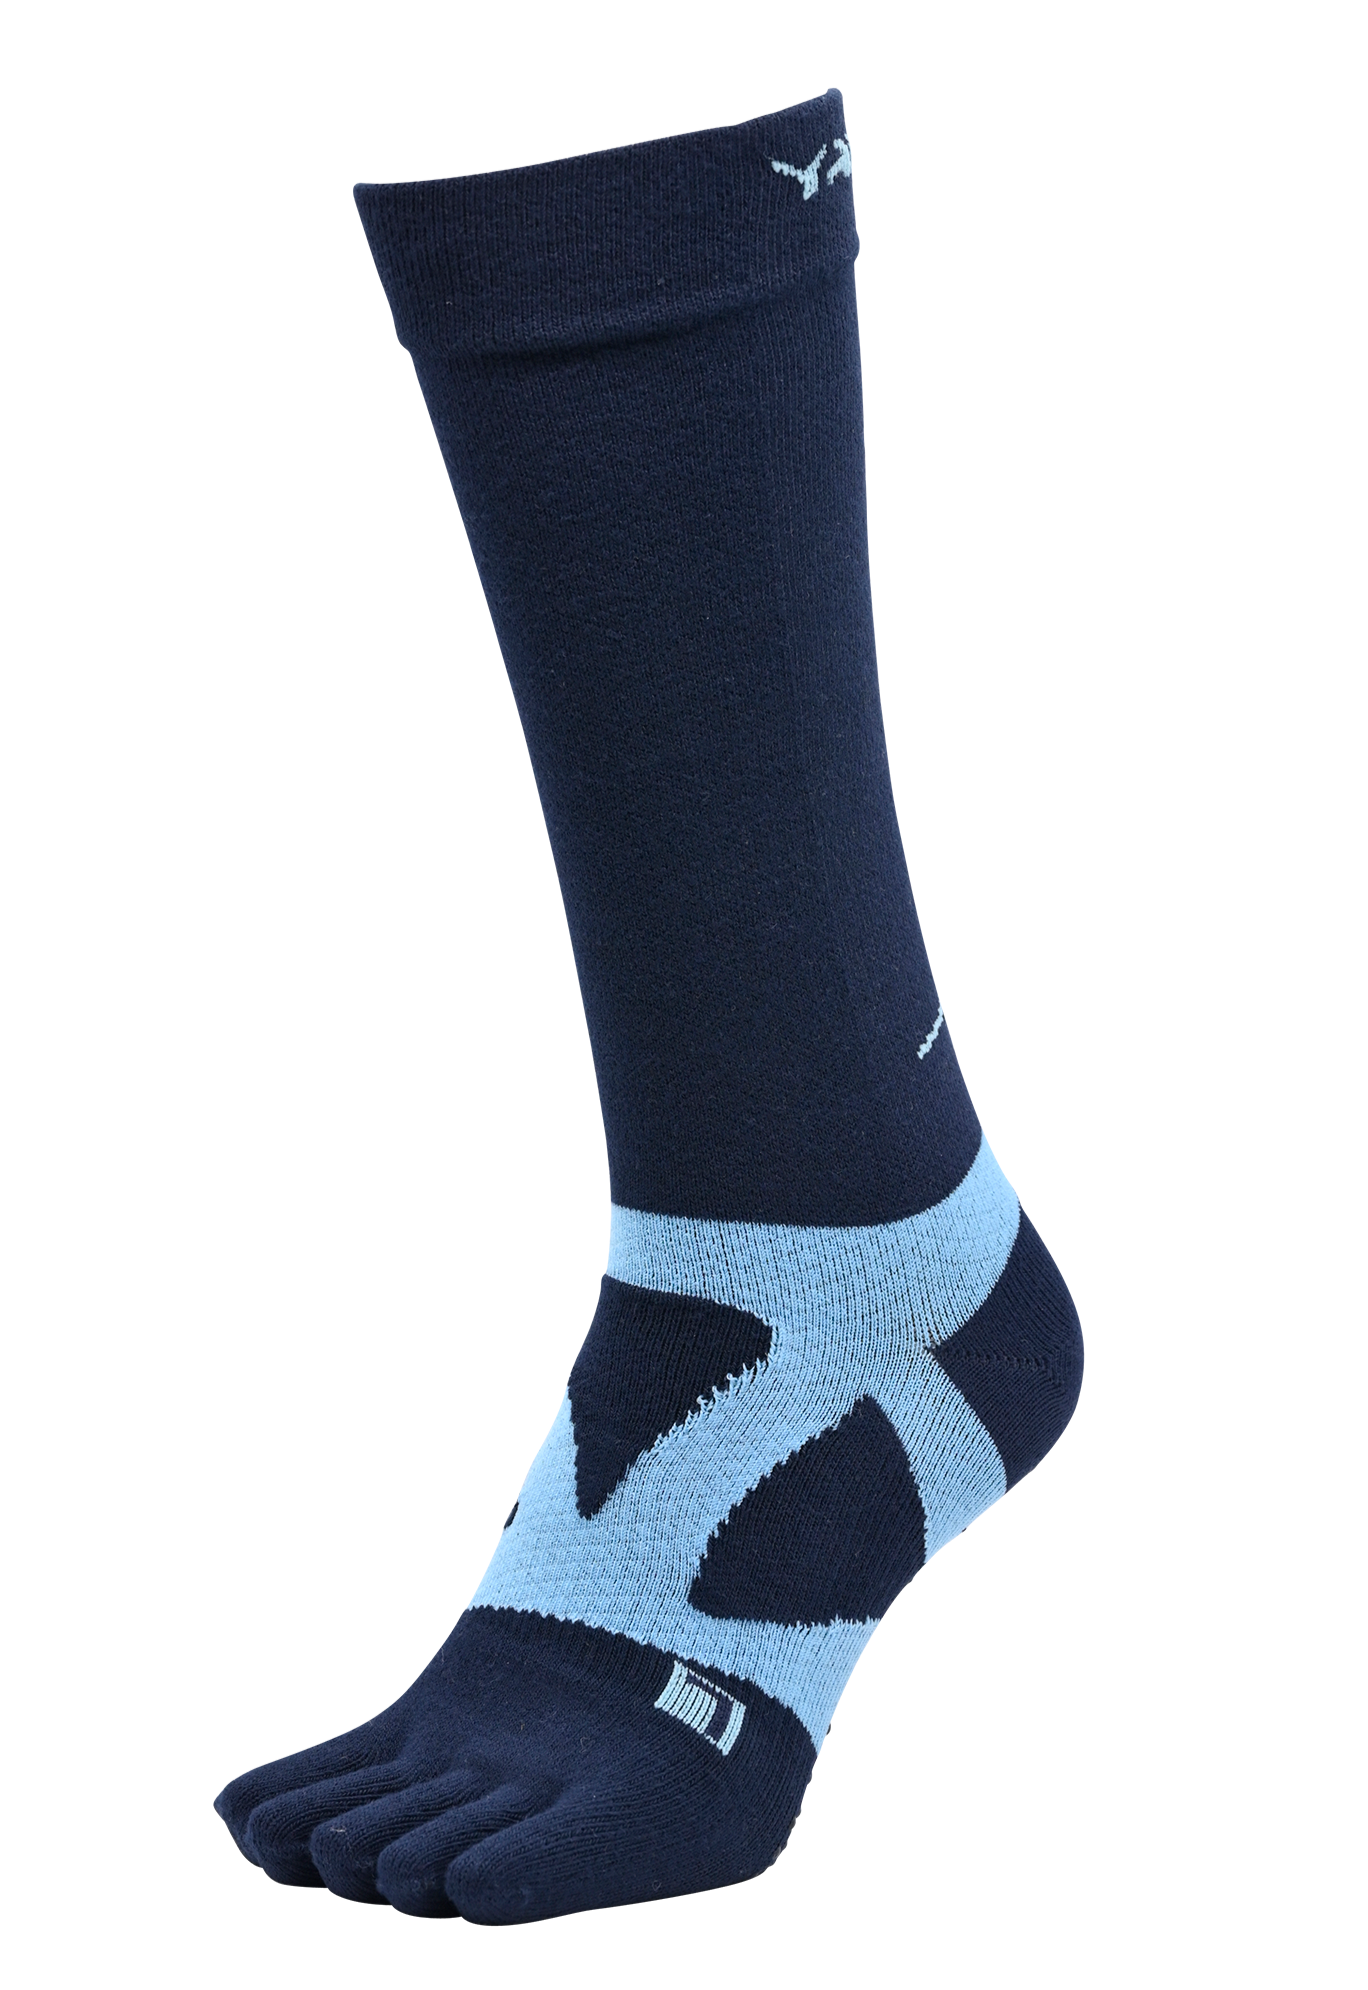 YAMAtune - Spider-Arch Compression - Long 5-Toe Socks - Non-Slip Dots - Navy/Blue